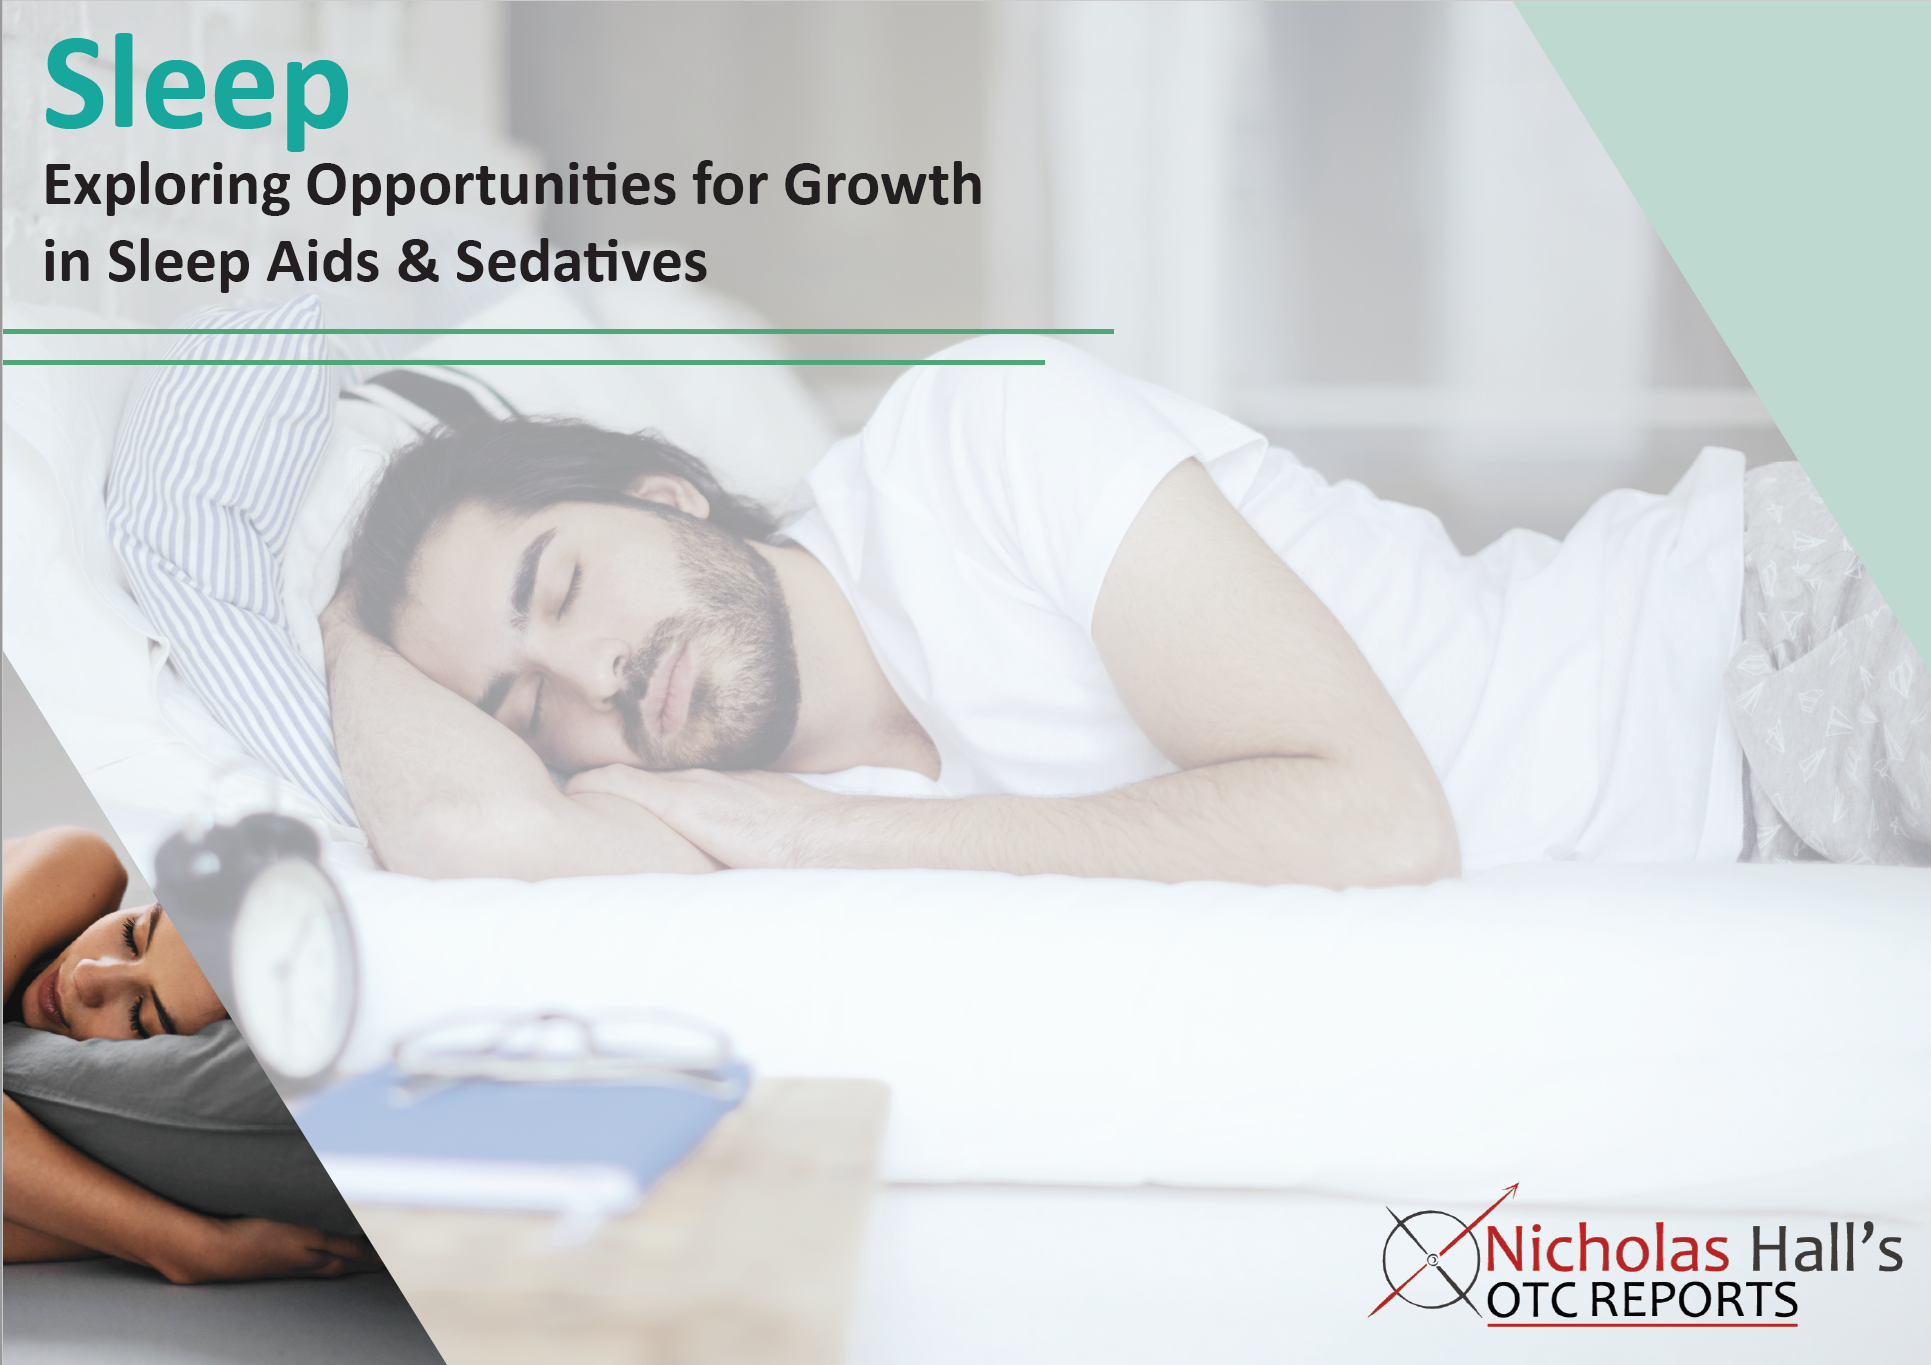 Sleep - Exploring Opportunities for Growth in Sleep Aids & Sedatives